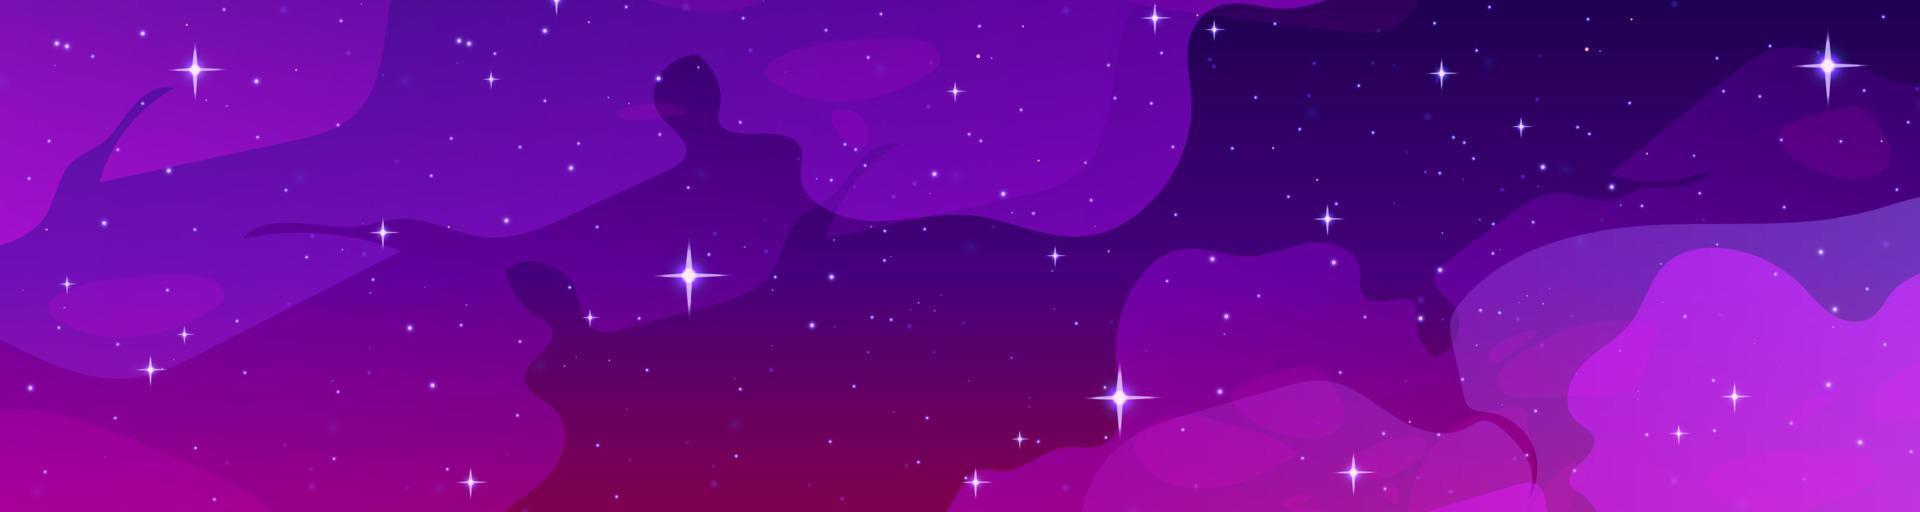 nacht sterrenhemel lucht in lila en roze kleuren vector